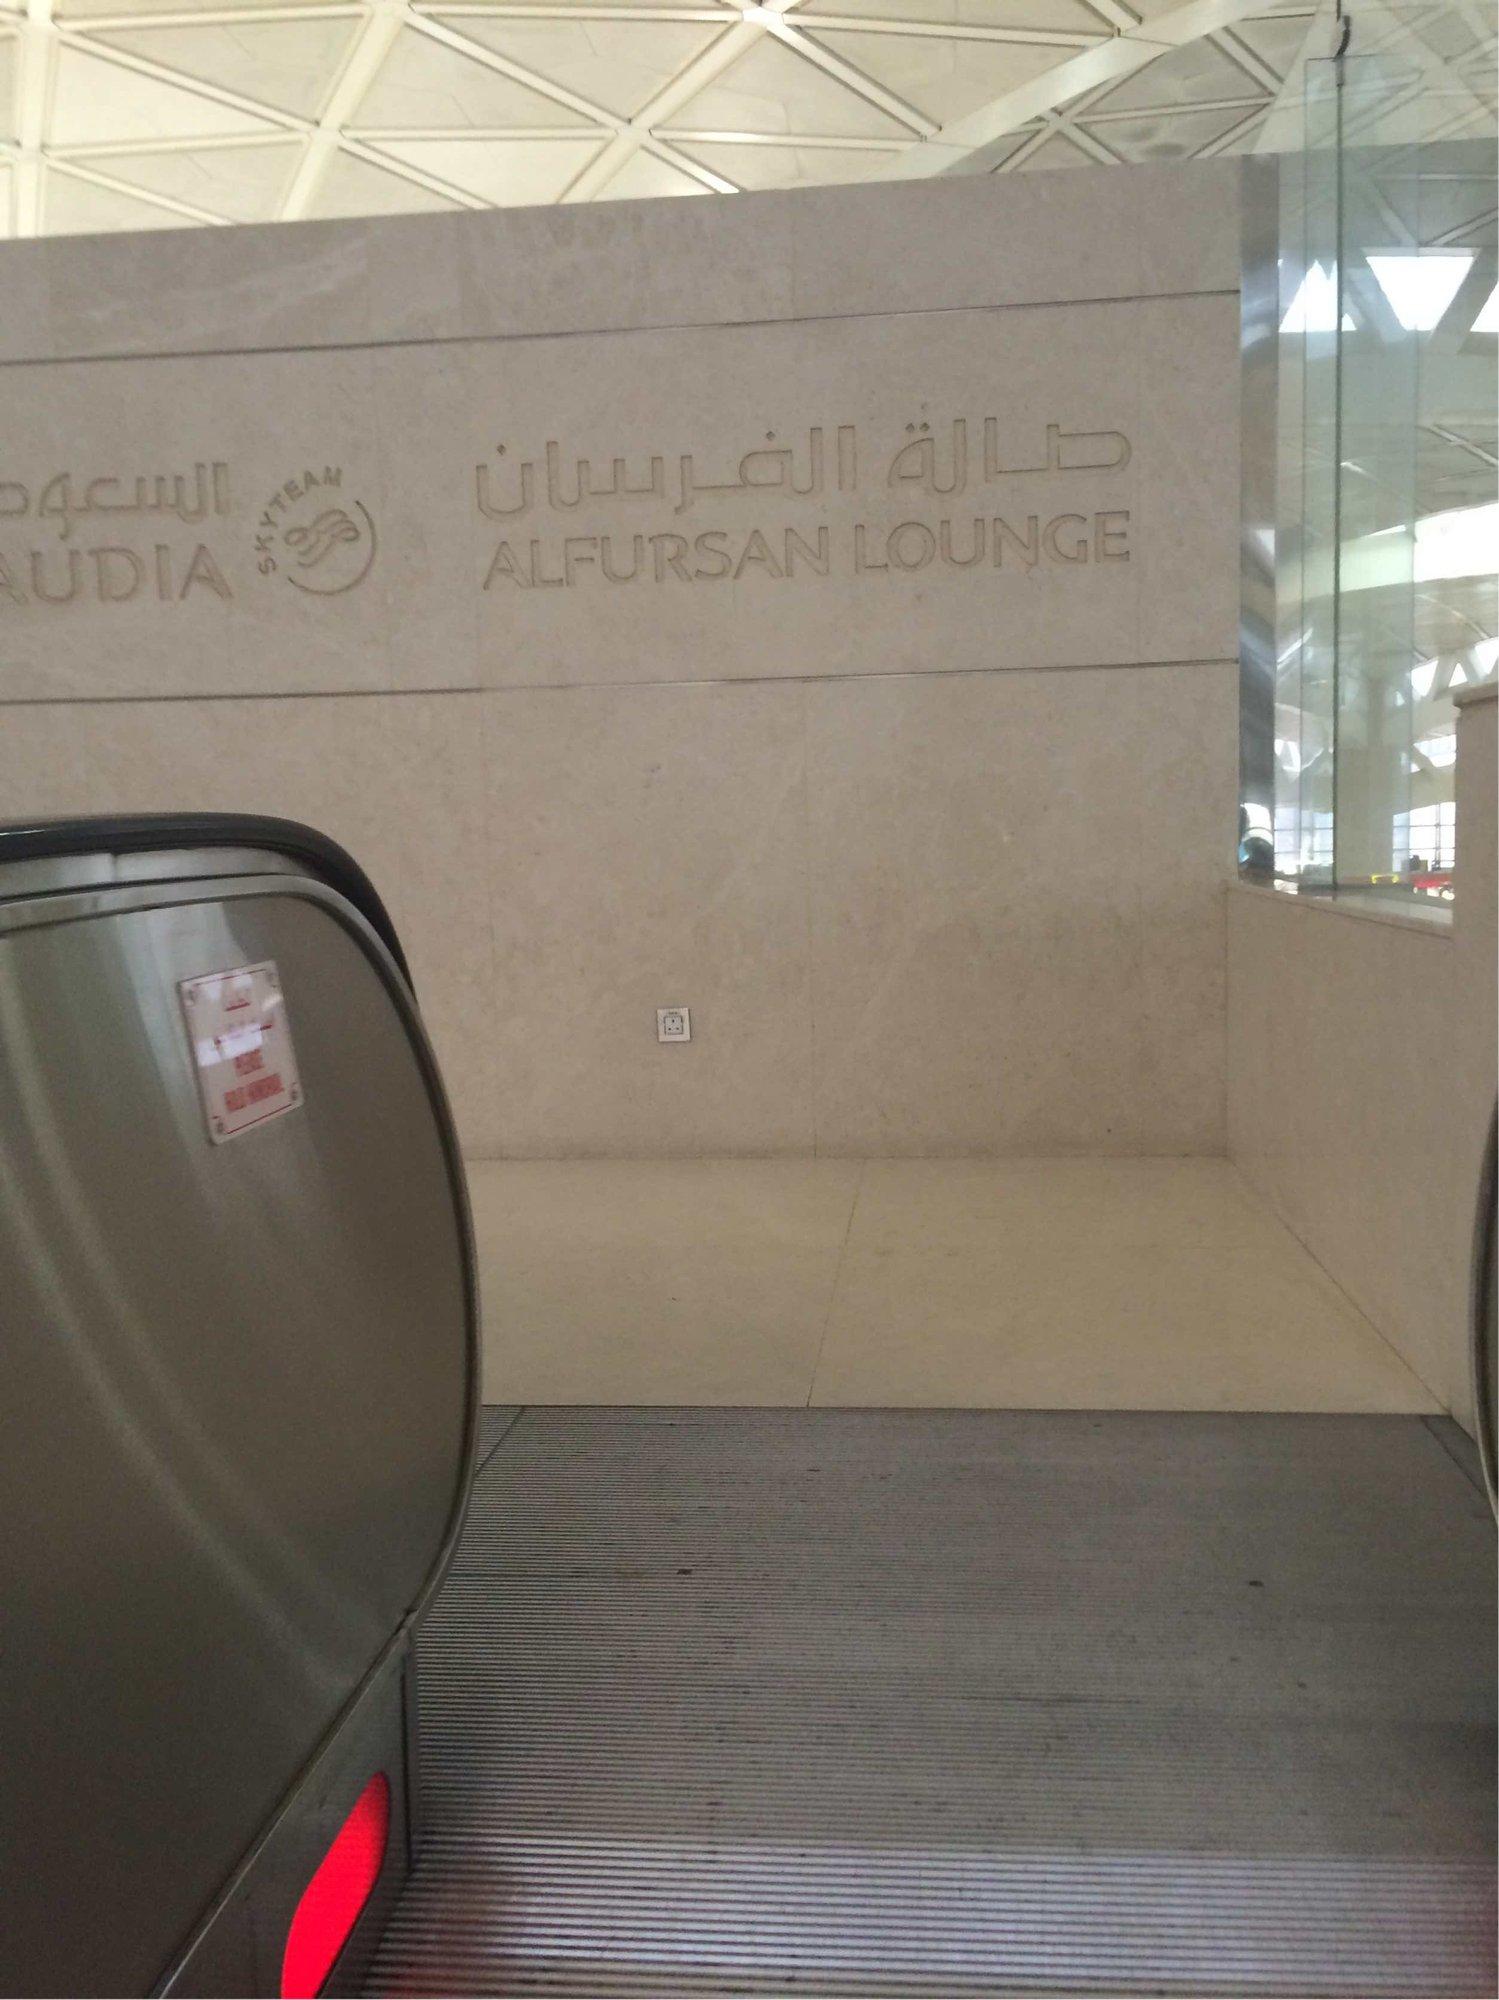 Saudia Al-Fursan Golden Lounge (Domestic) image 3 of 3